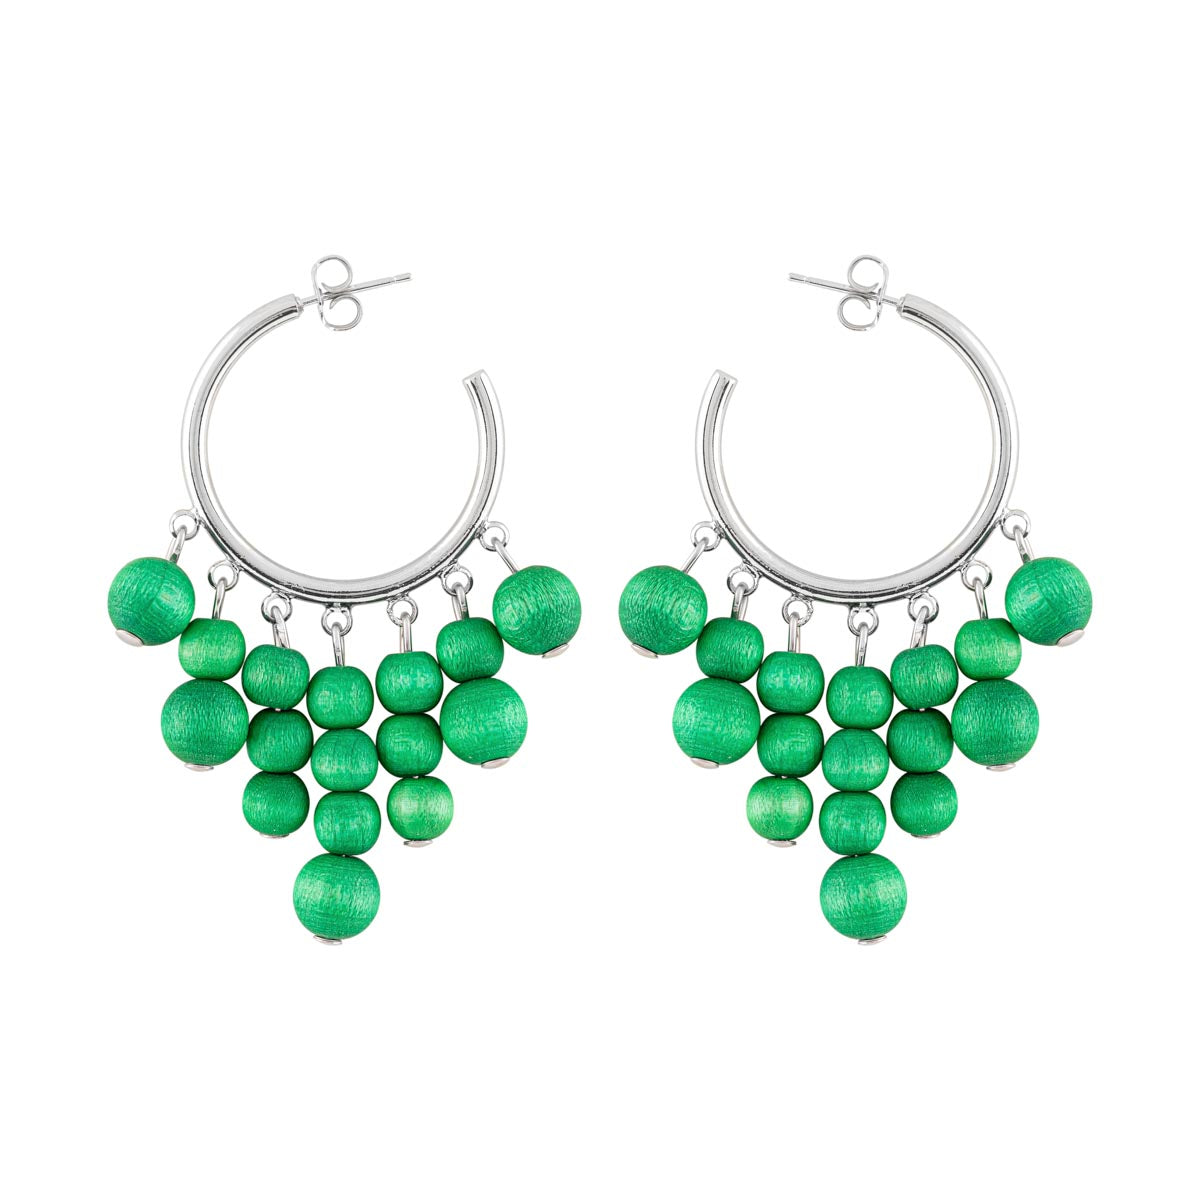 Gisella earrings, green